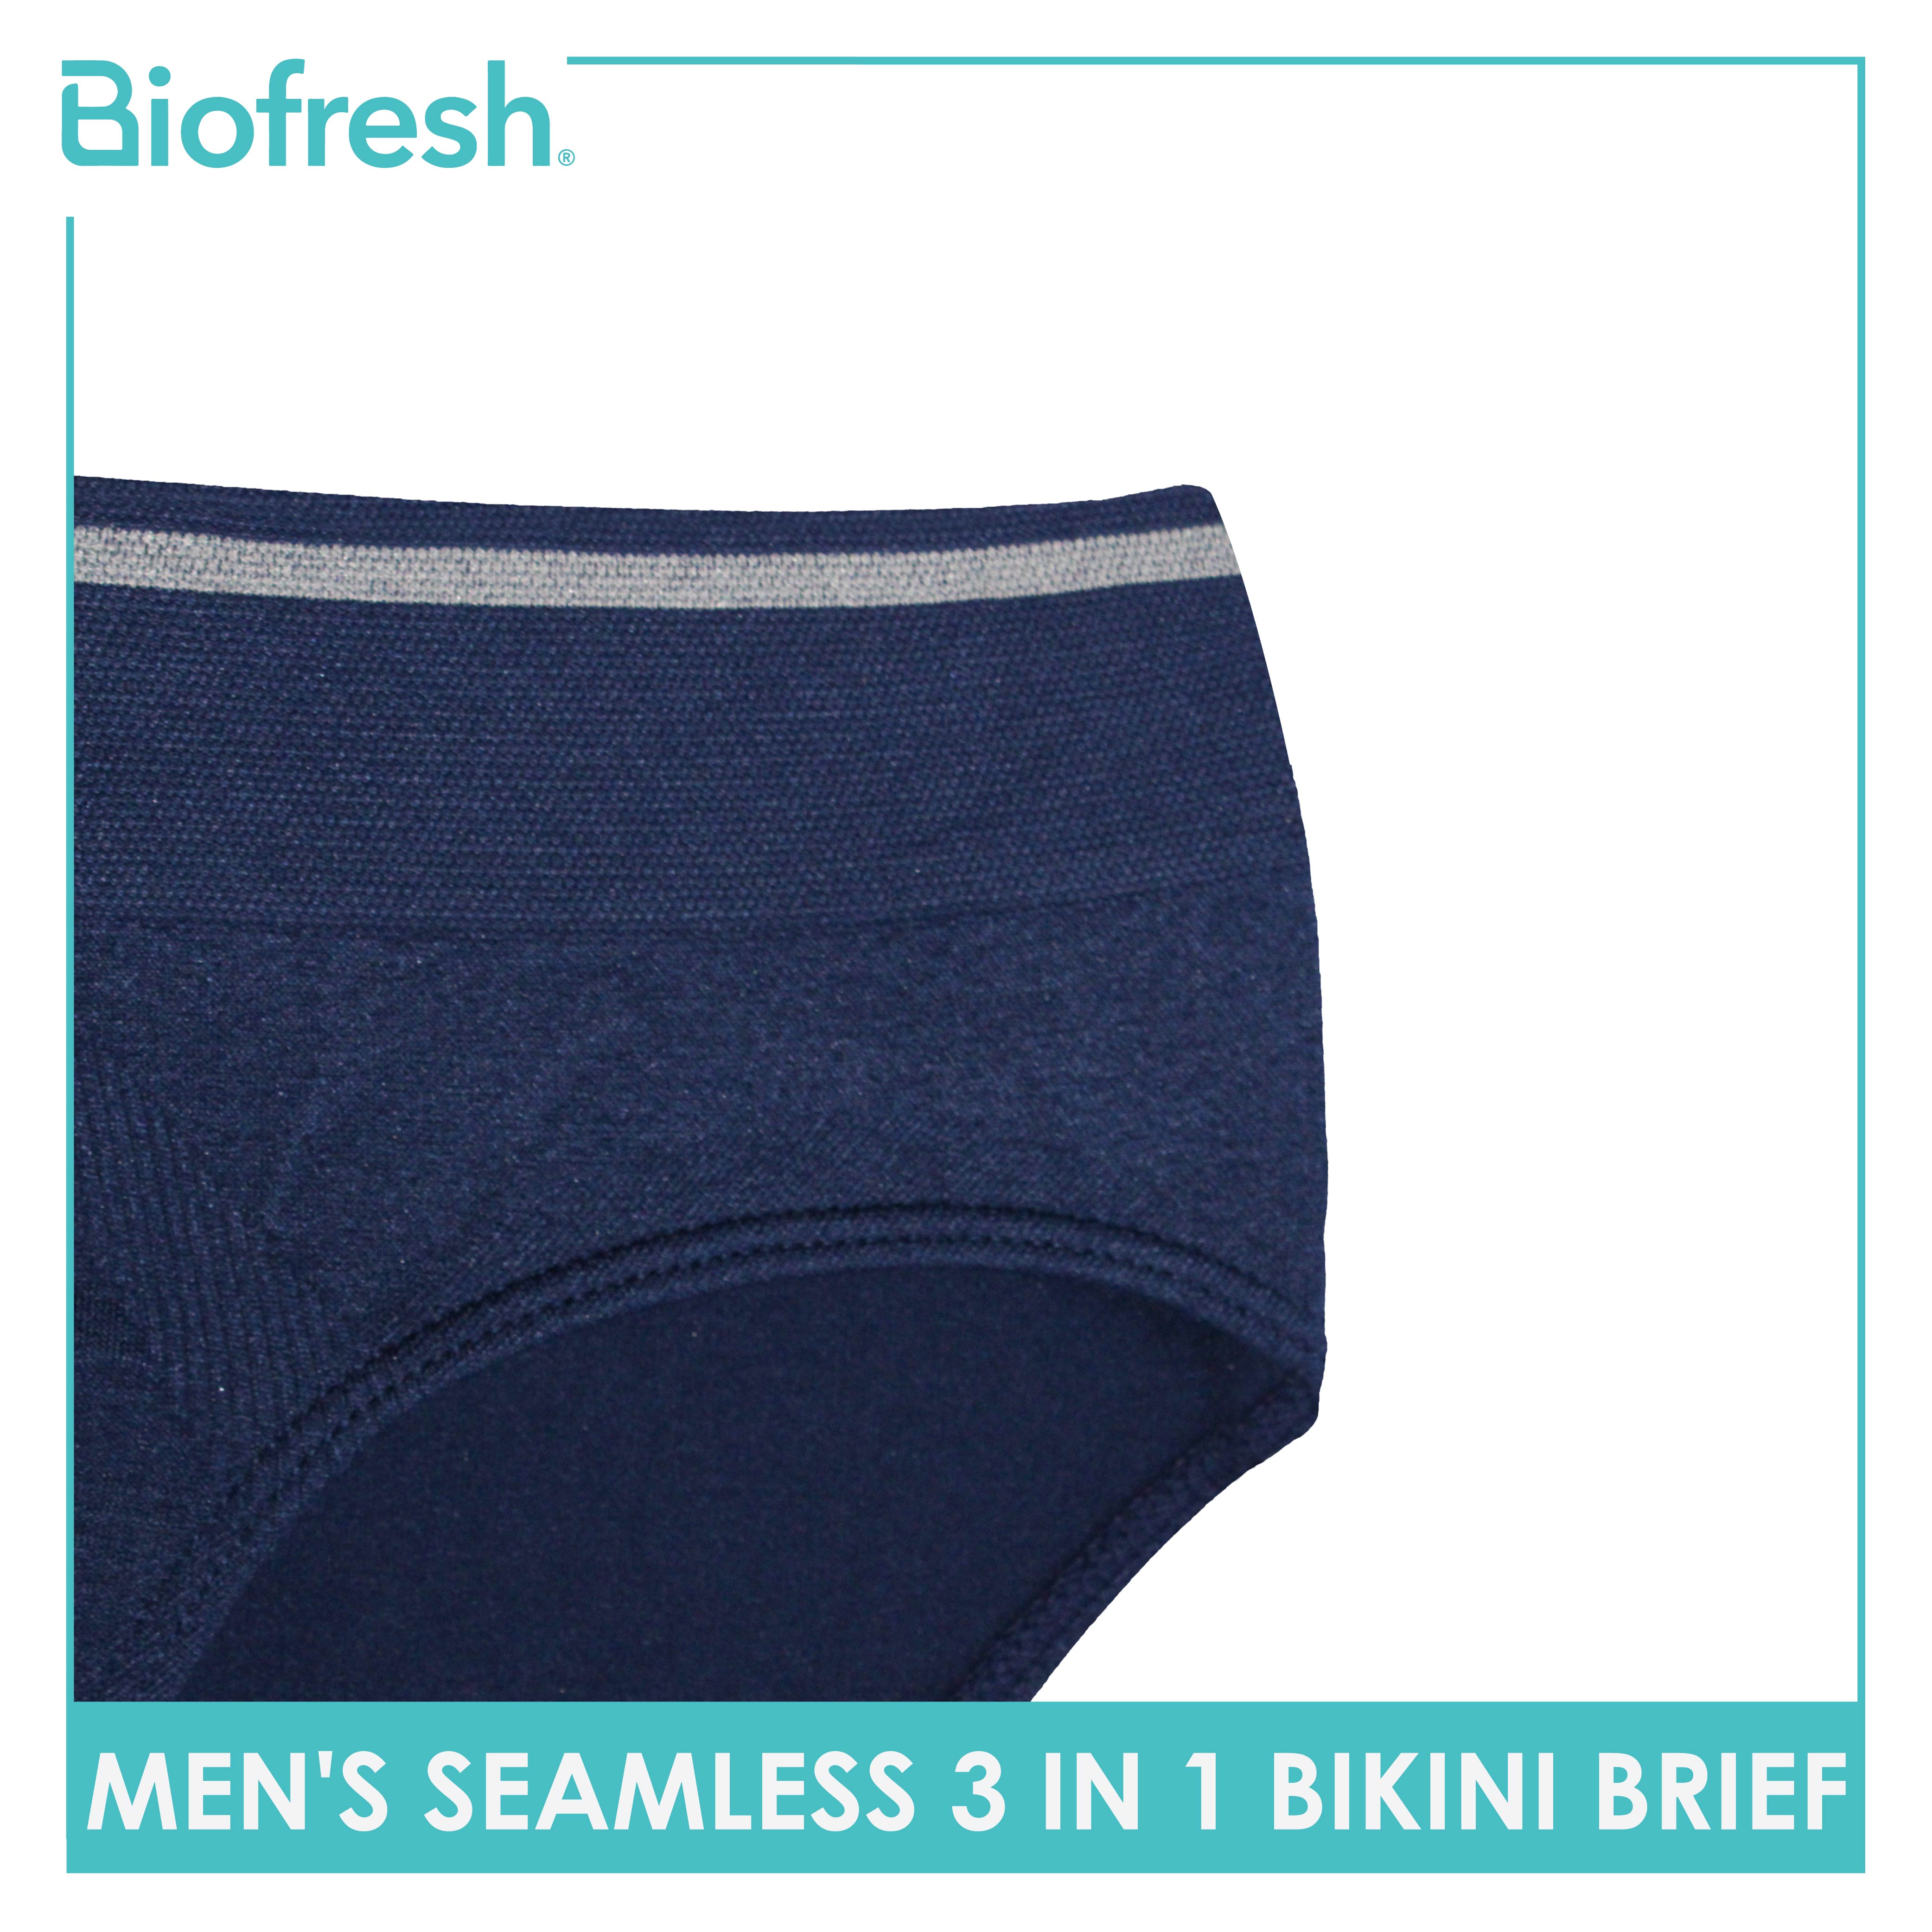 Men's Seamless Bikini Brief